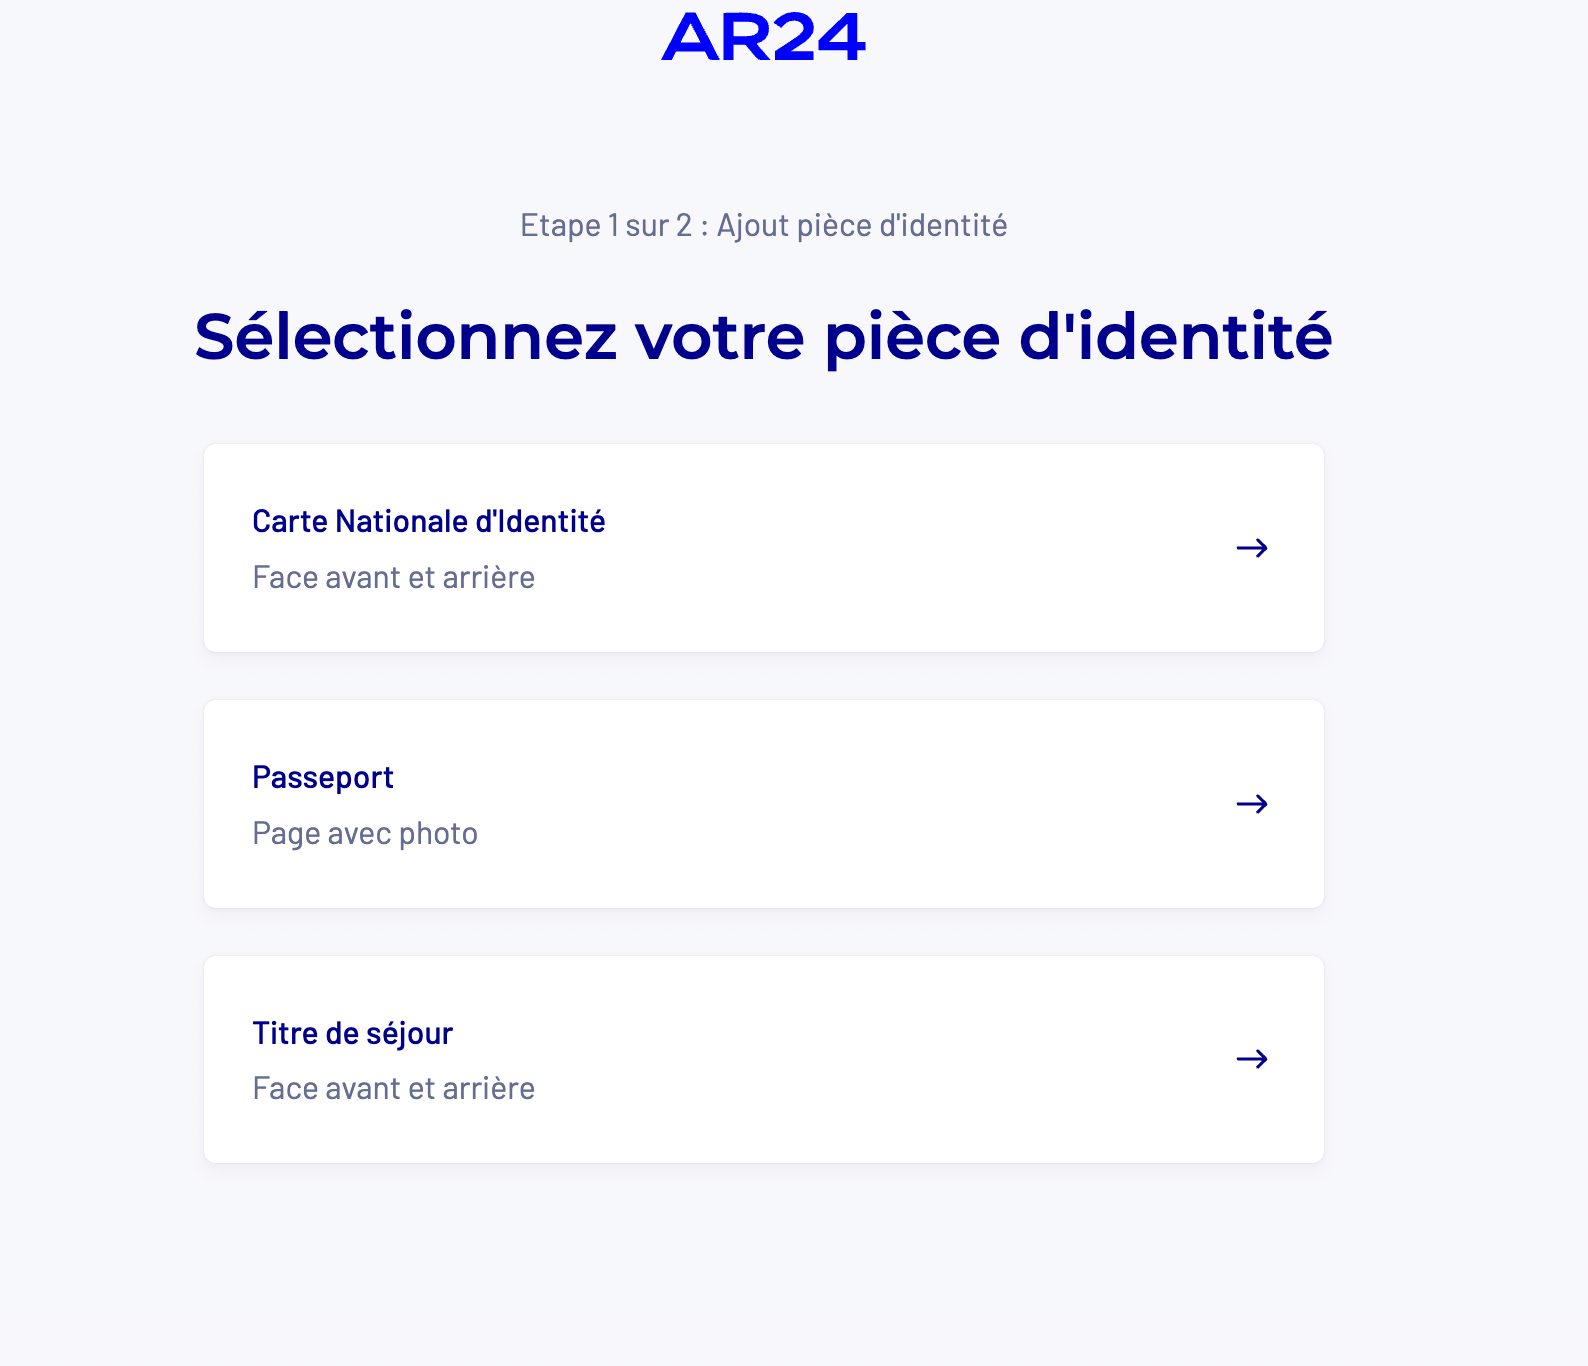 ar24-etape-1-type-piece-identite